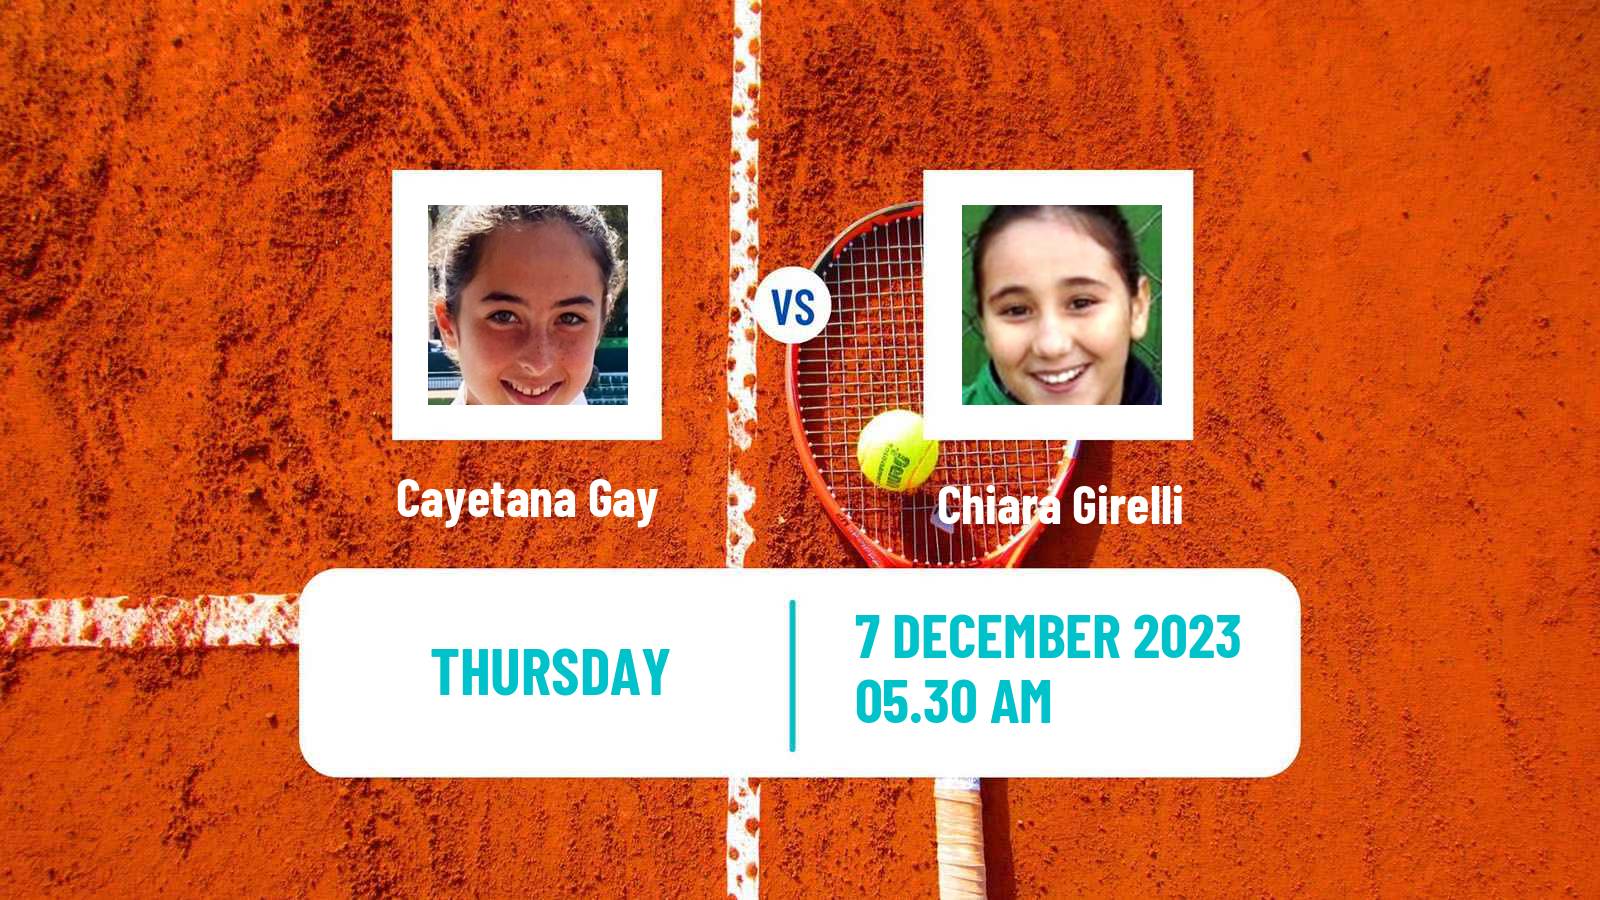 Tennis ITF W15 Valencia 2 Women Cayetana Gay - Chiara Girelli